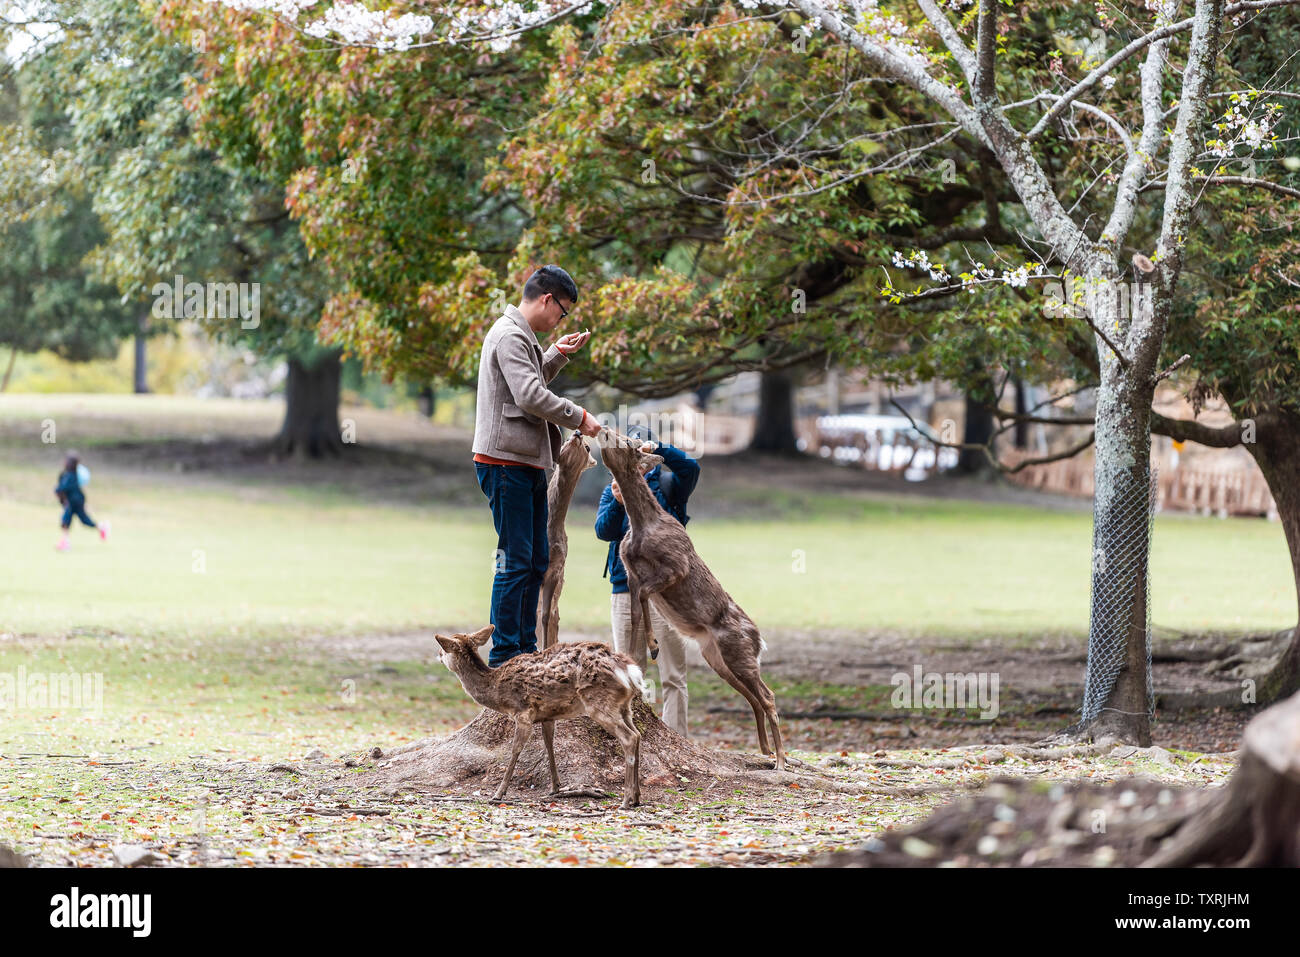 Nara, Japan - April 14, 2019: People tourist on city park feeding training deer up feeding rice crackers and trick Stock Photo